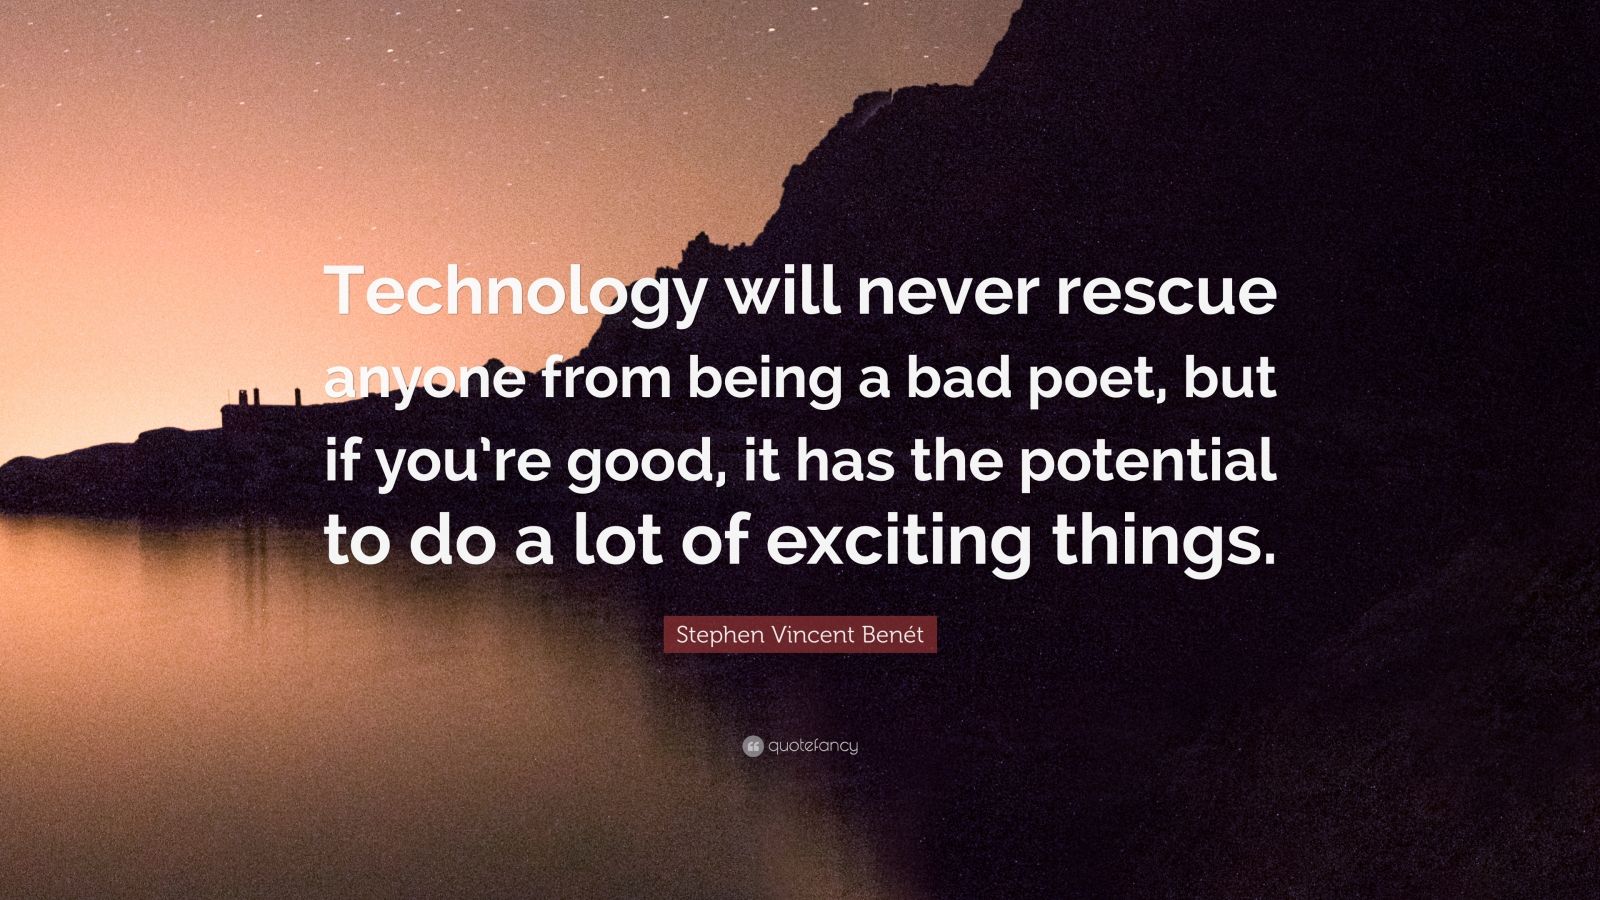 Stephen Vincent Benét Quote “Technology will never rescue